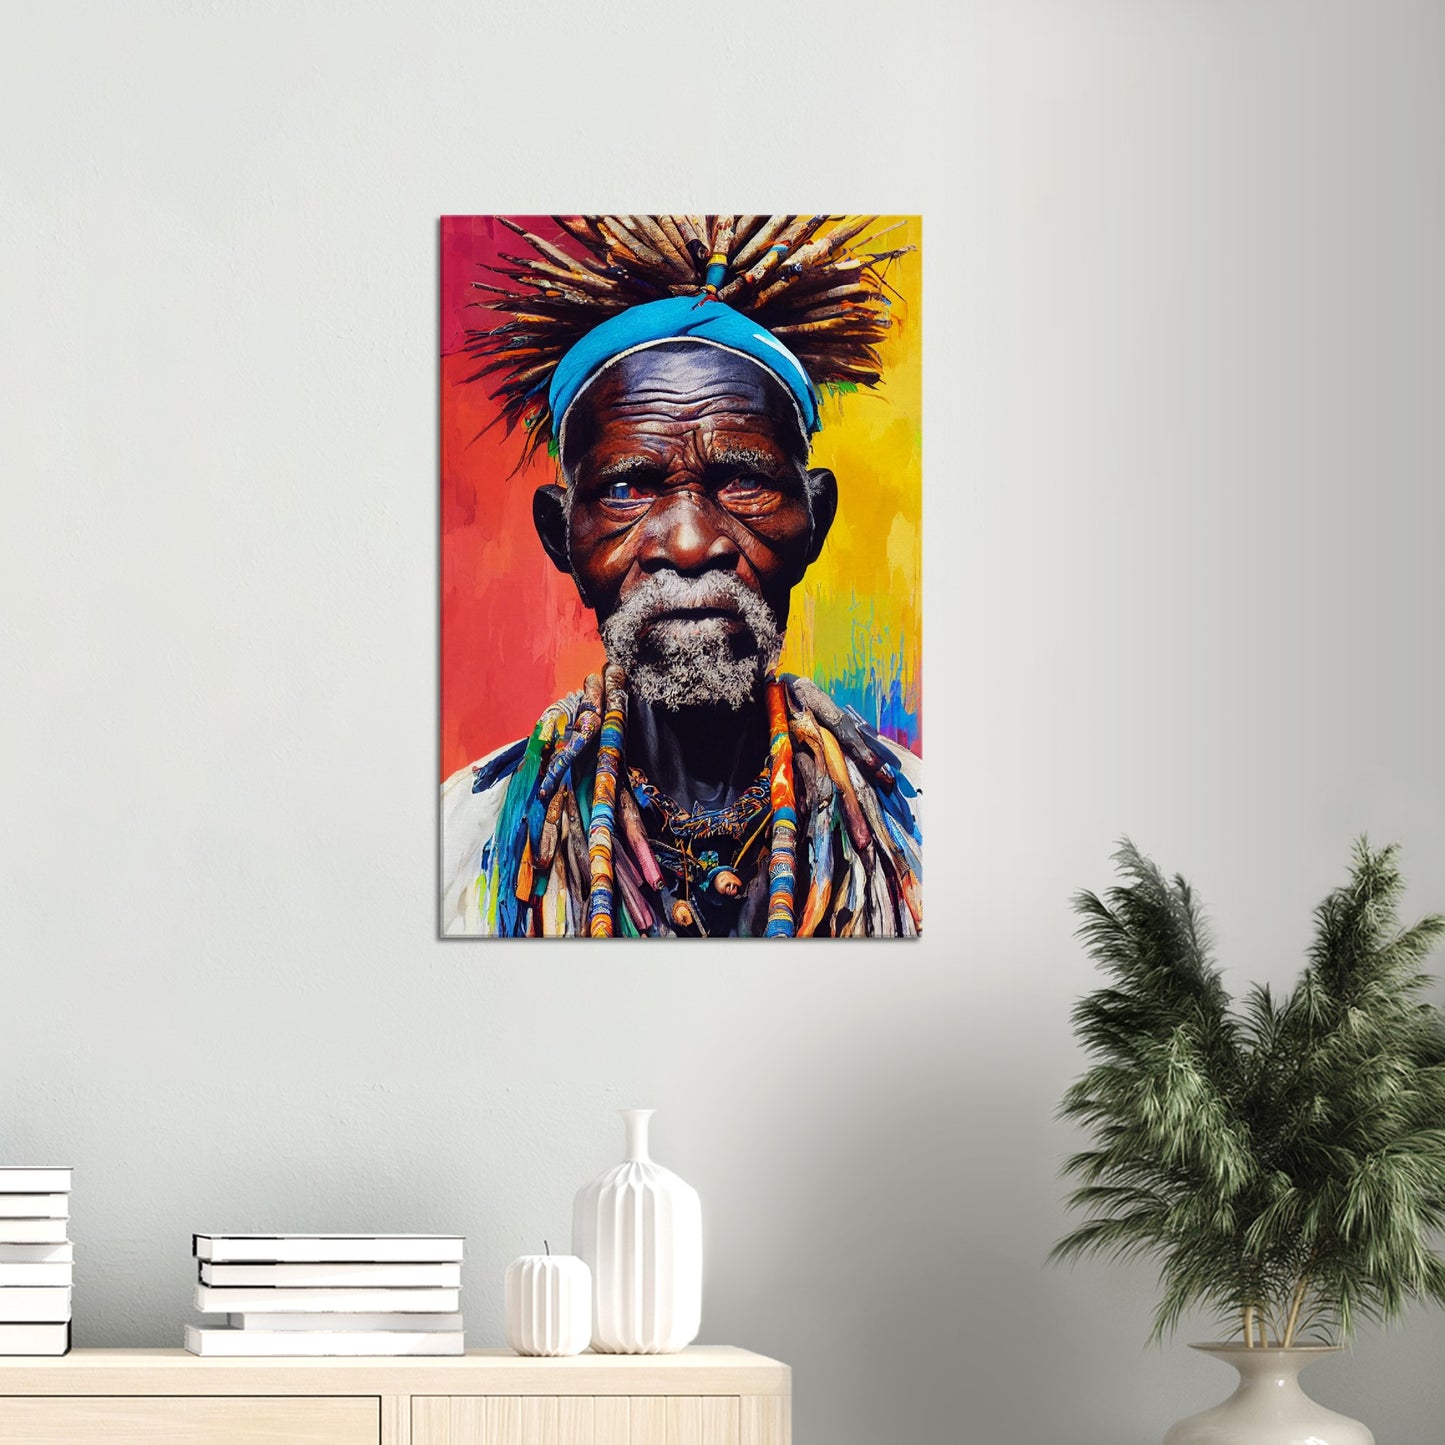 African Tribe Portrait - Urban Art auf Leinwand